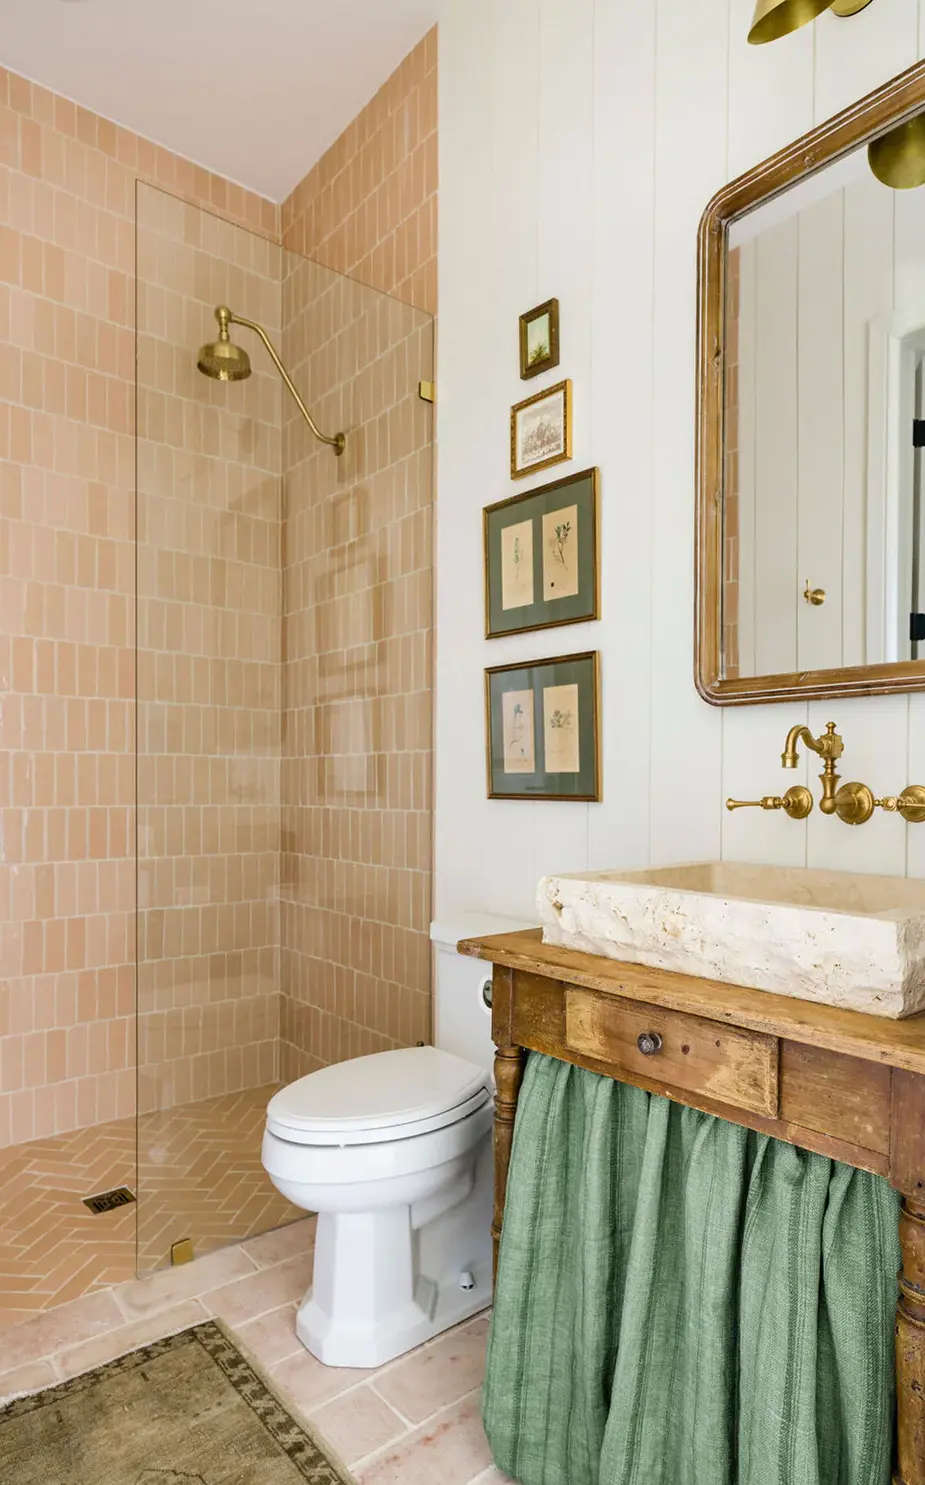 Modern bathroom design with terracotta tiles